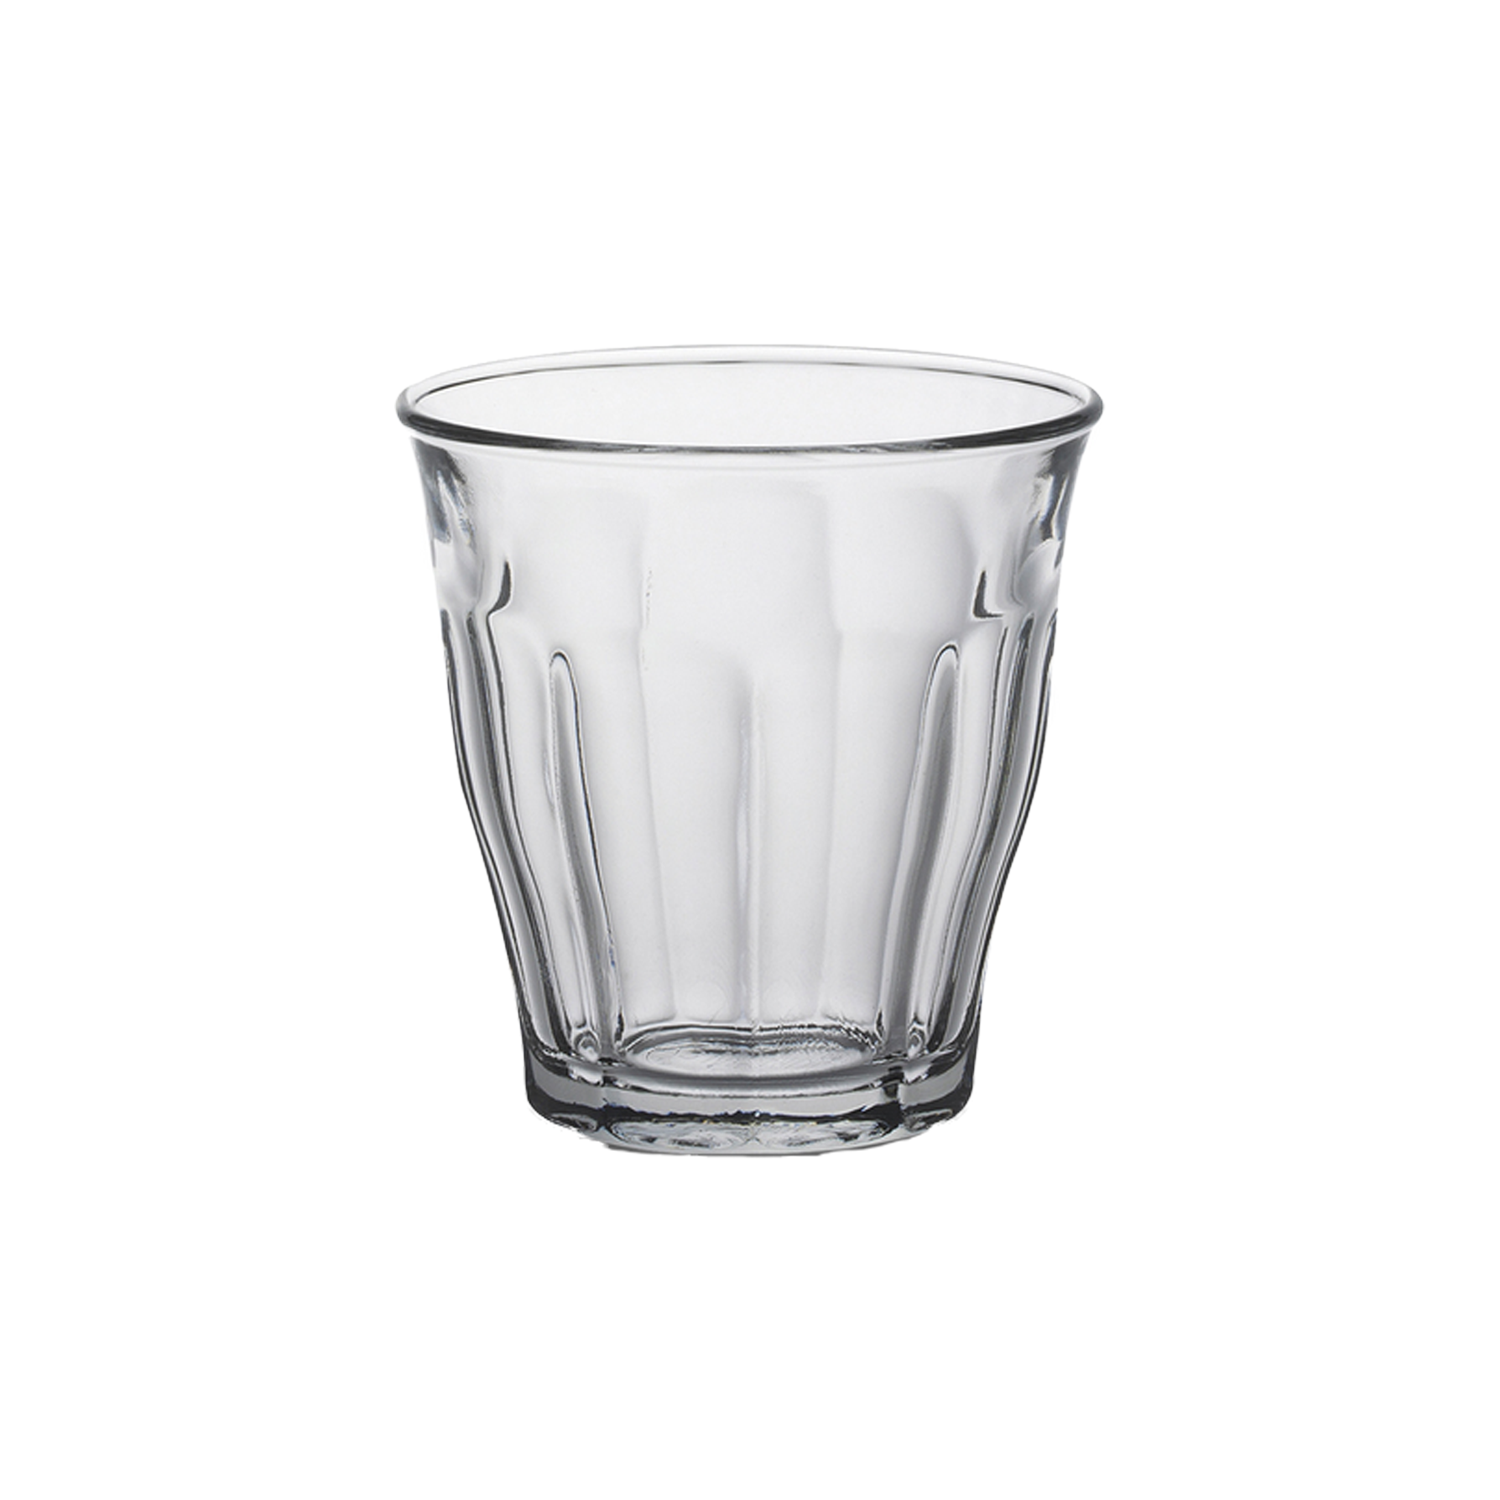 Duralex Picardie Glass 120ml